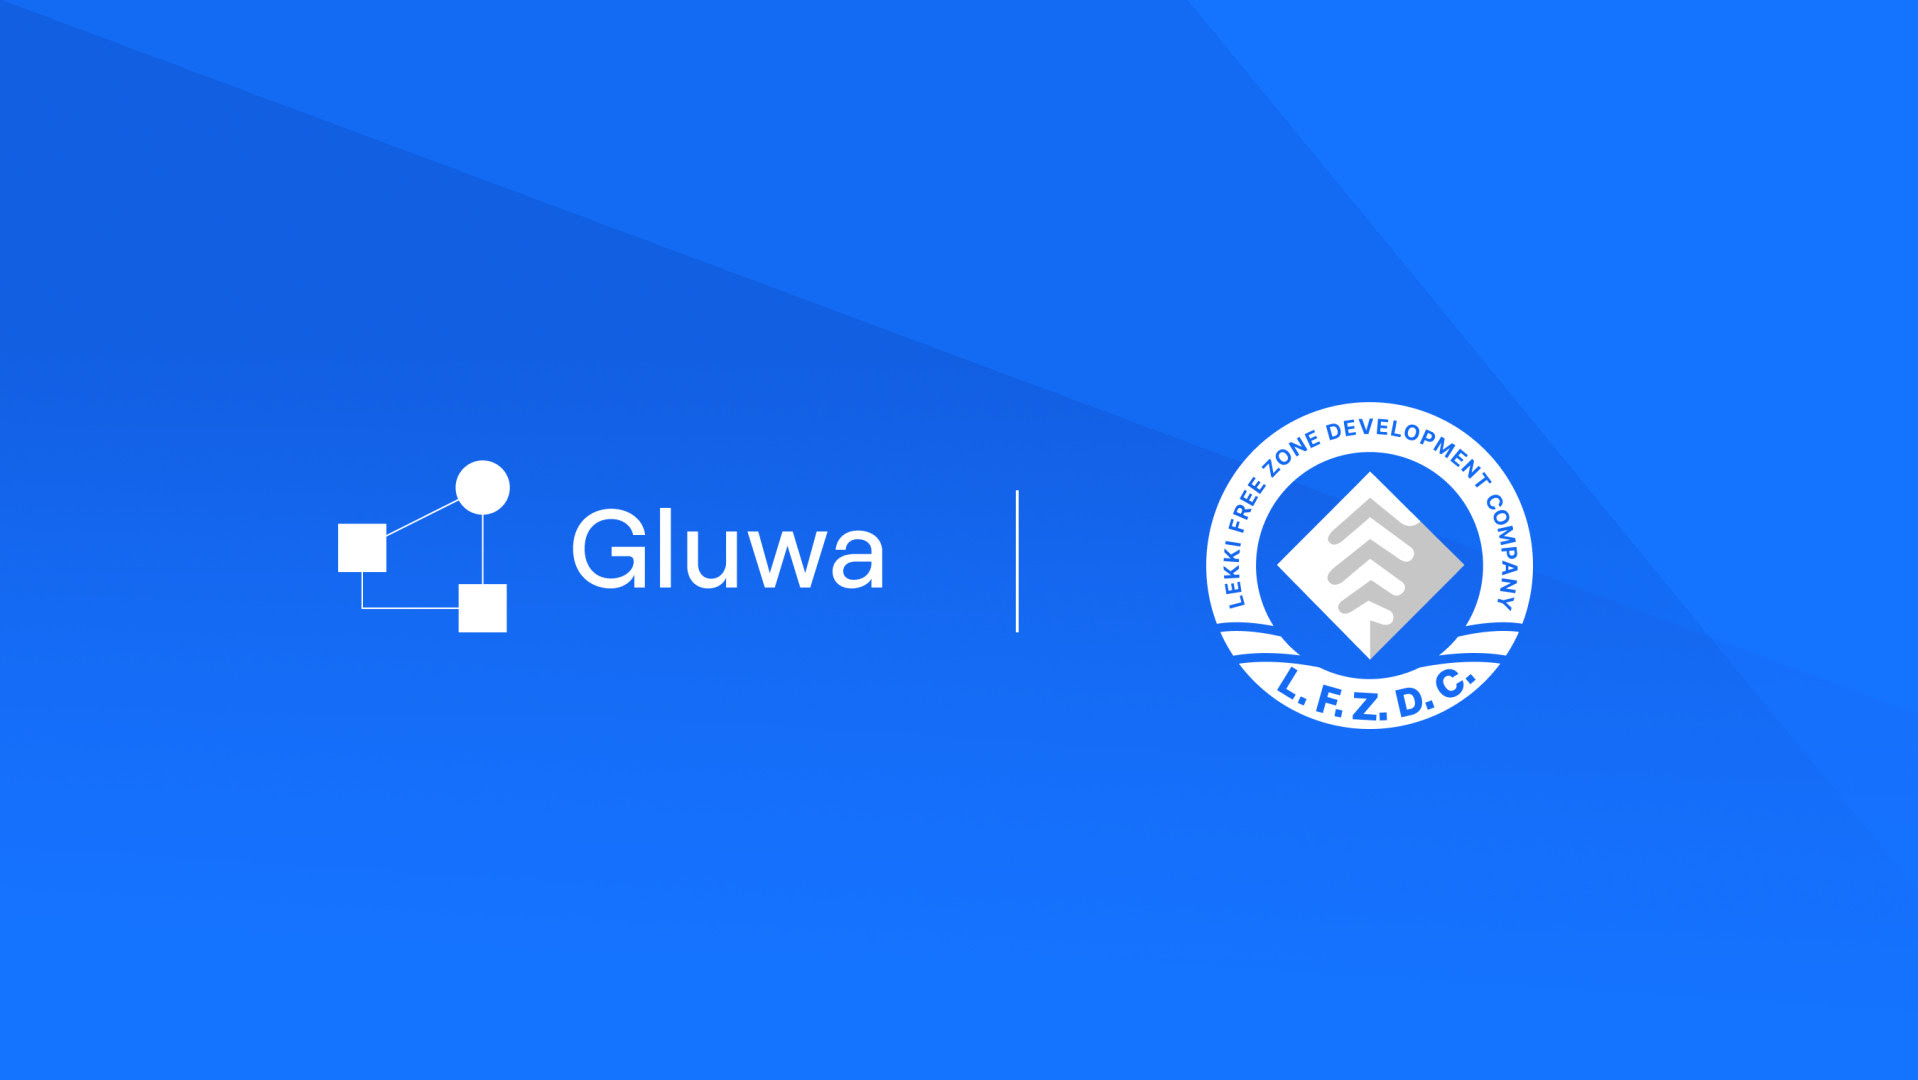  blockchain free zone technology gluwa company collaborate 